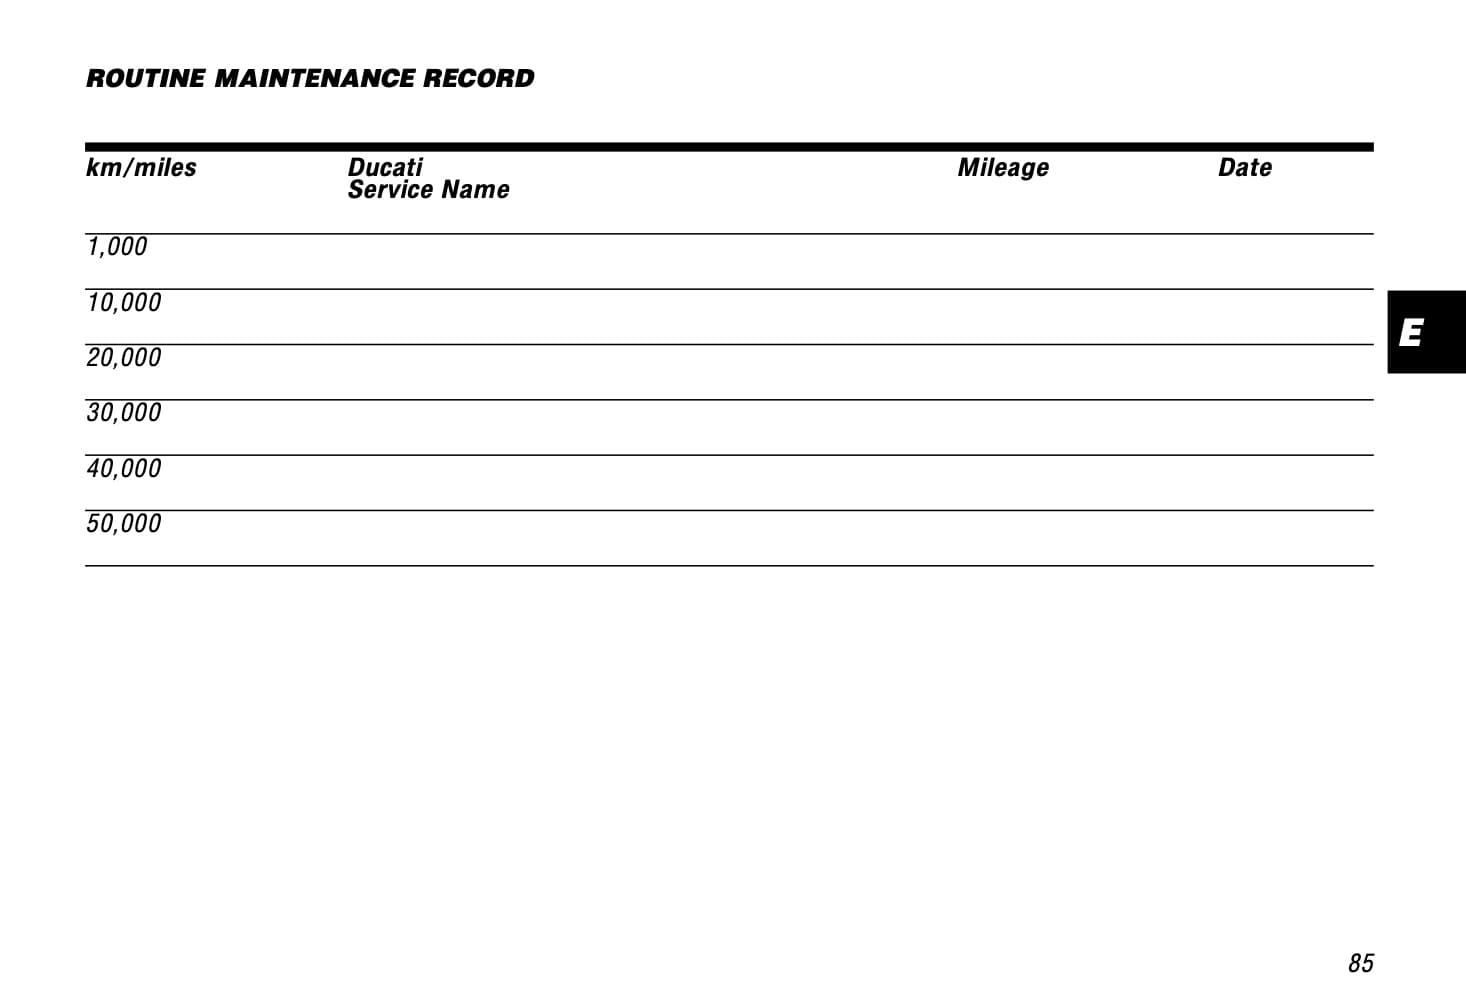 Ducati ST4 manual maintenance schedule screenshot 2